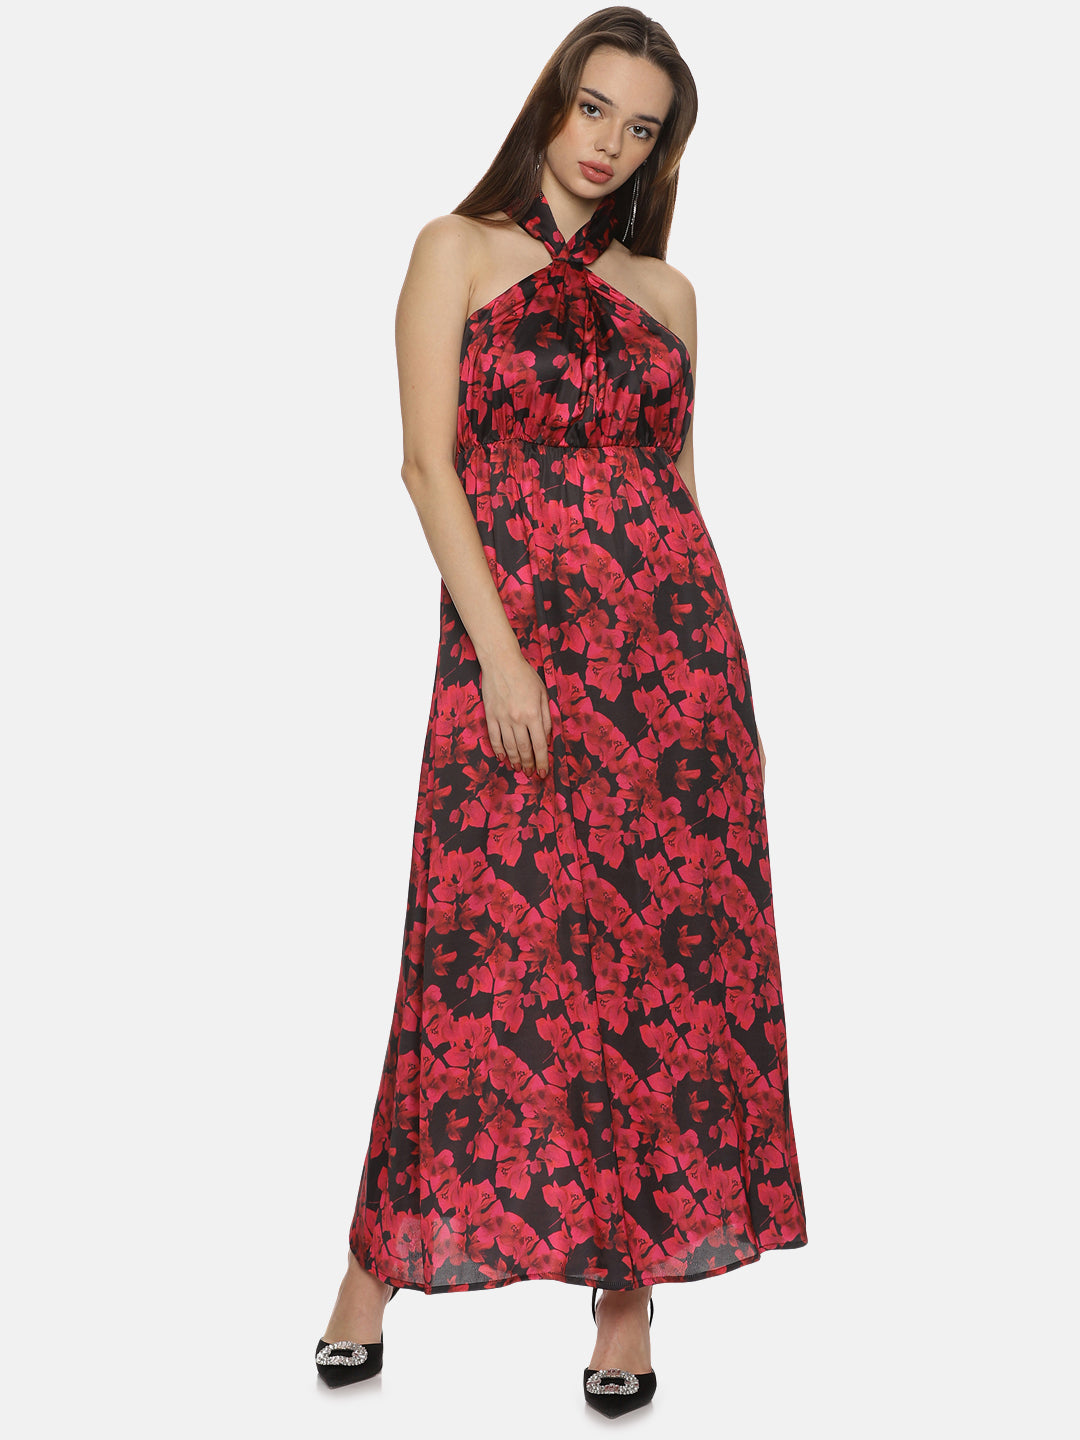 IS.U Floral Red Halter Maxi Dress